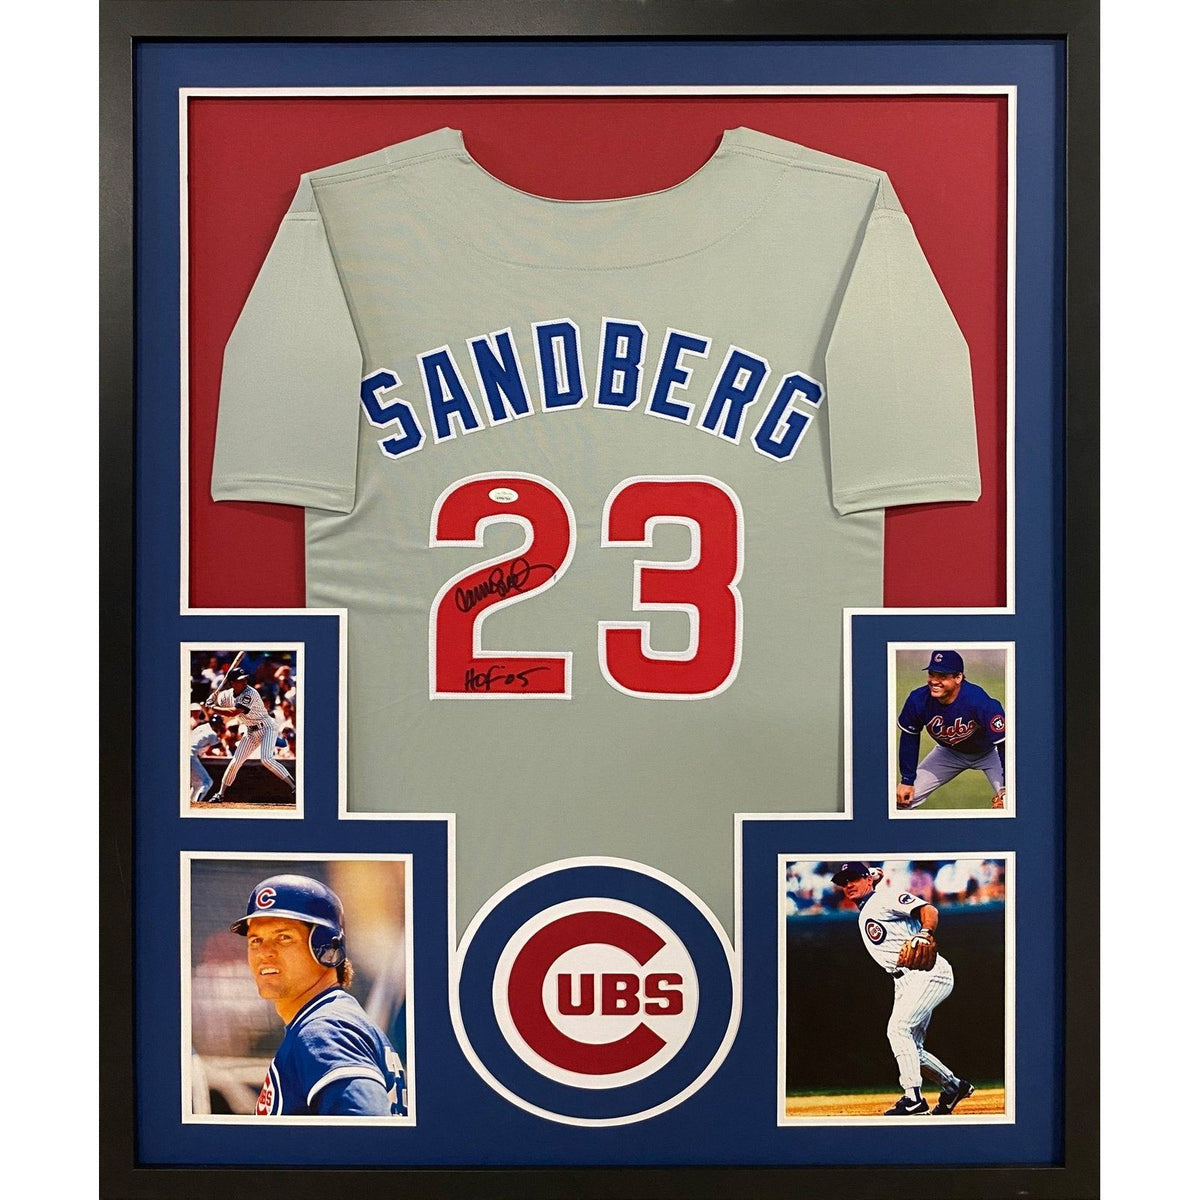 Ryne Sandberg Autographed HOF 05 and Framed Pinstriped Cubs Jersey